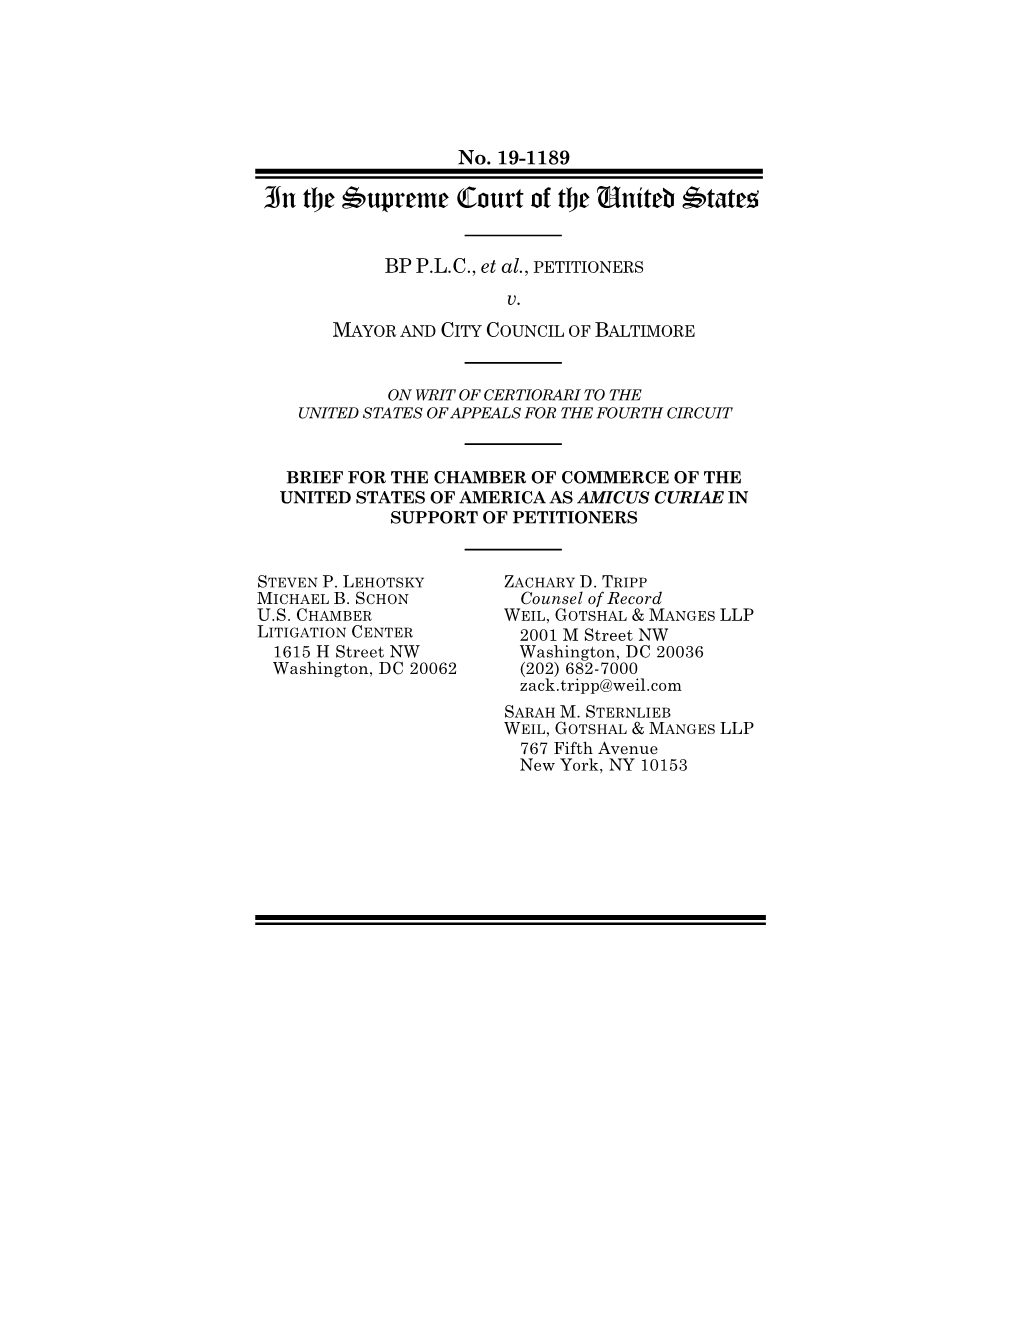 Supreme Court Brief Template DocsLib